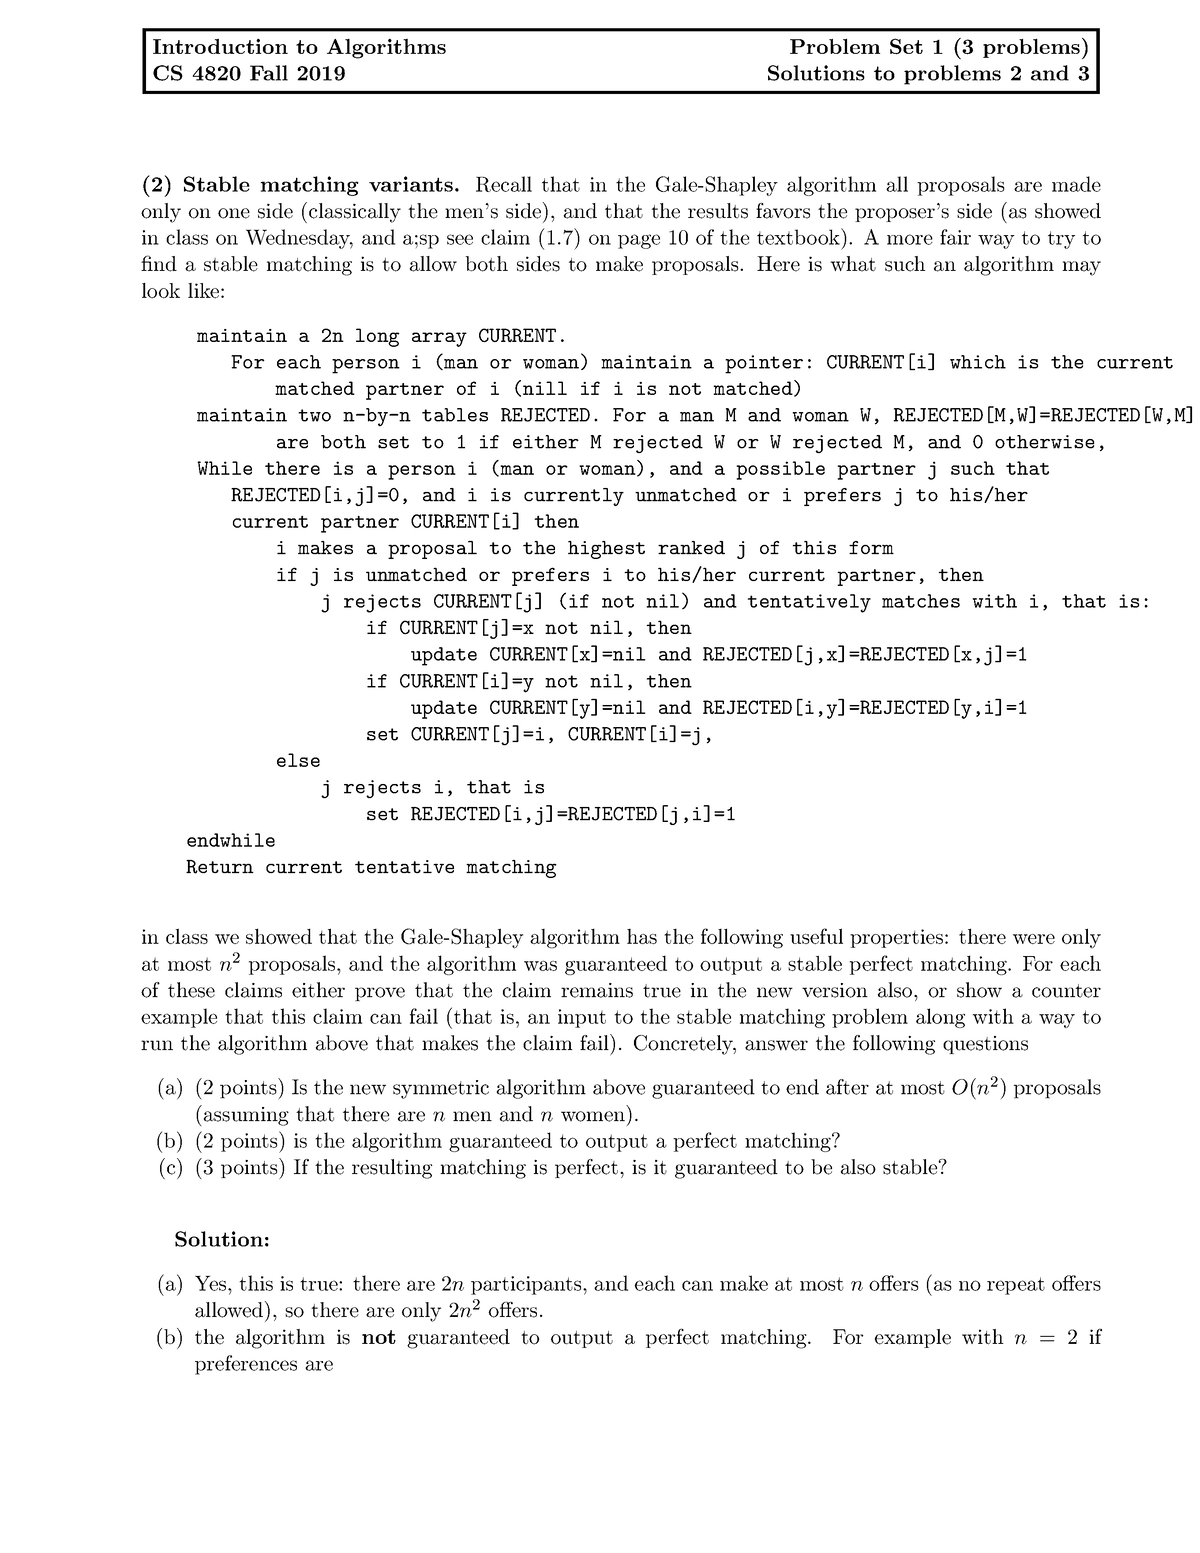 Ps1solutions Problems 2+3 Introduction to Algorithms Problem Set 1 (3